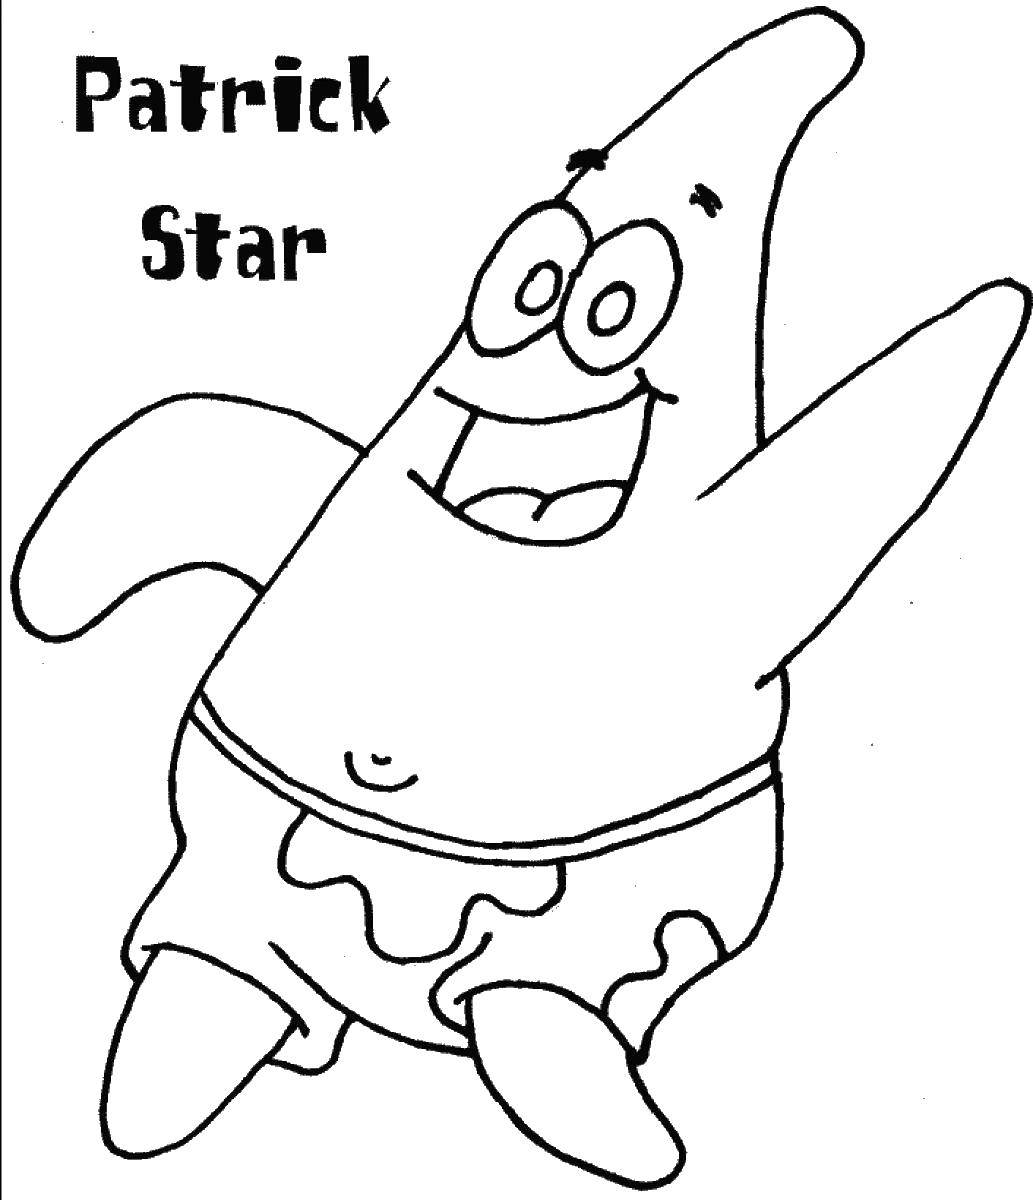 Coloring Patrick star. Category cartoons. Tags:  Cartoon character, spongebob, spongebob, Patrick.